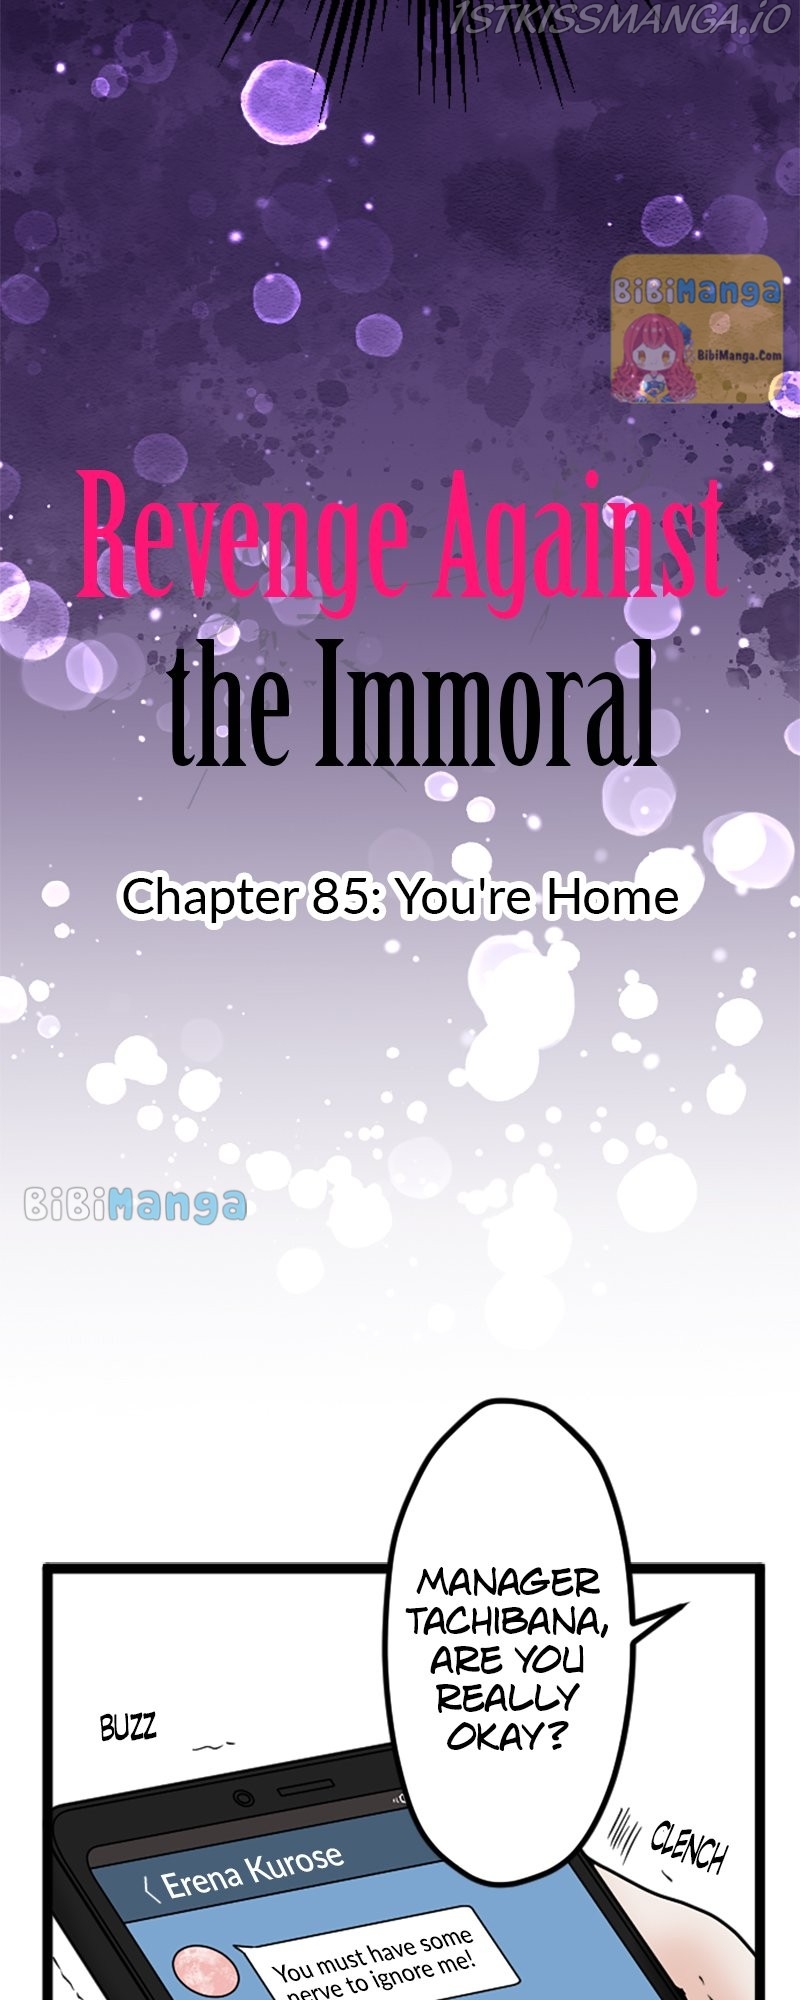 Revenge Against the Immoral chapter 85